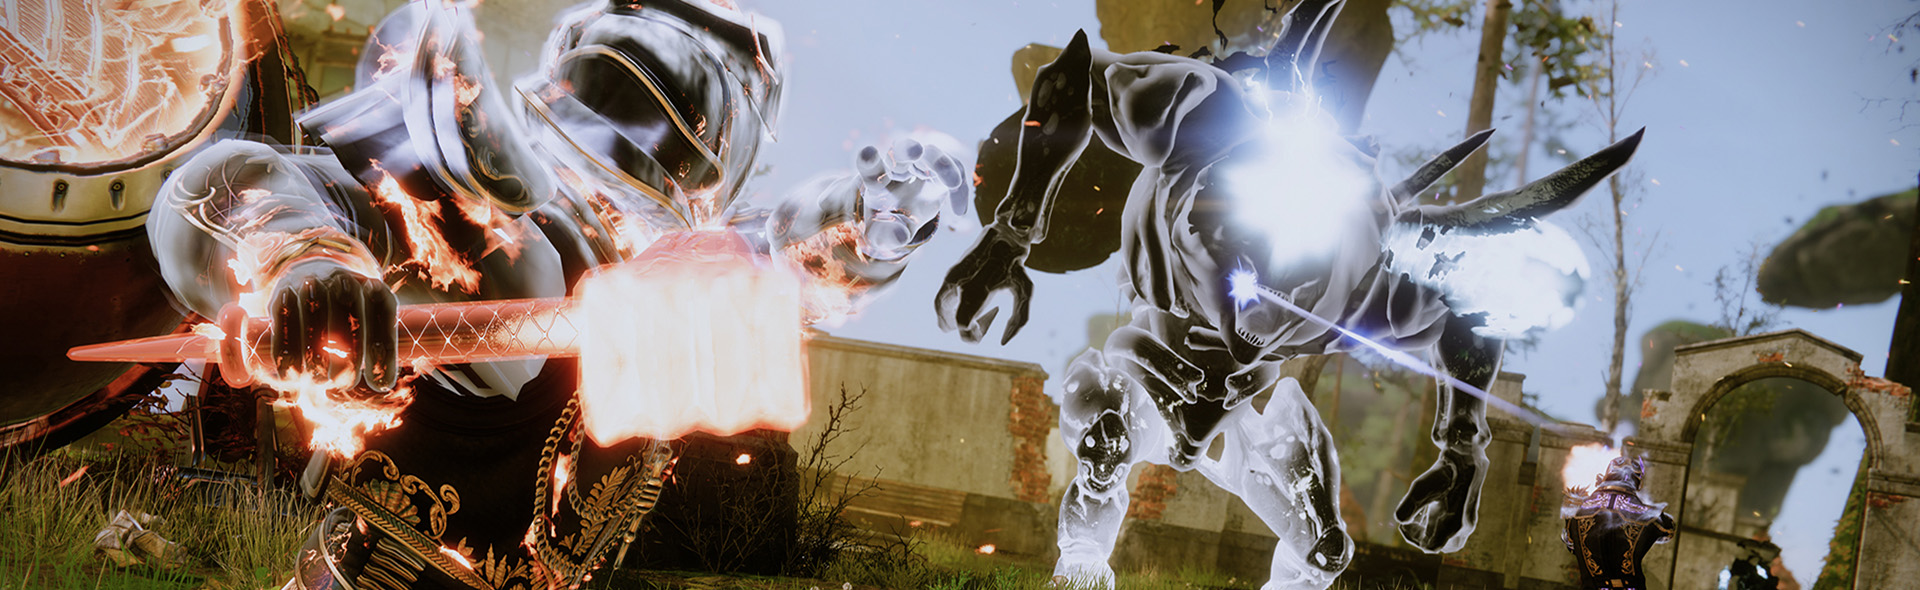 Destiny 2 Prime Gaming Rewards Catching Rays Exotic Bundle